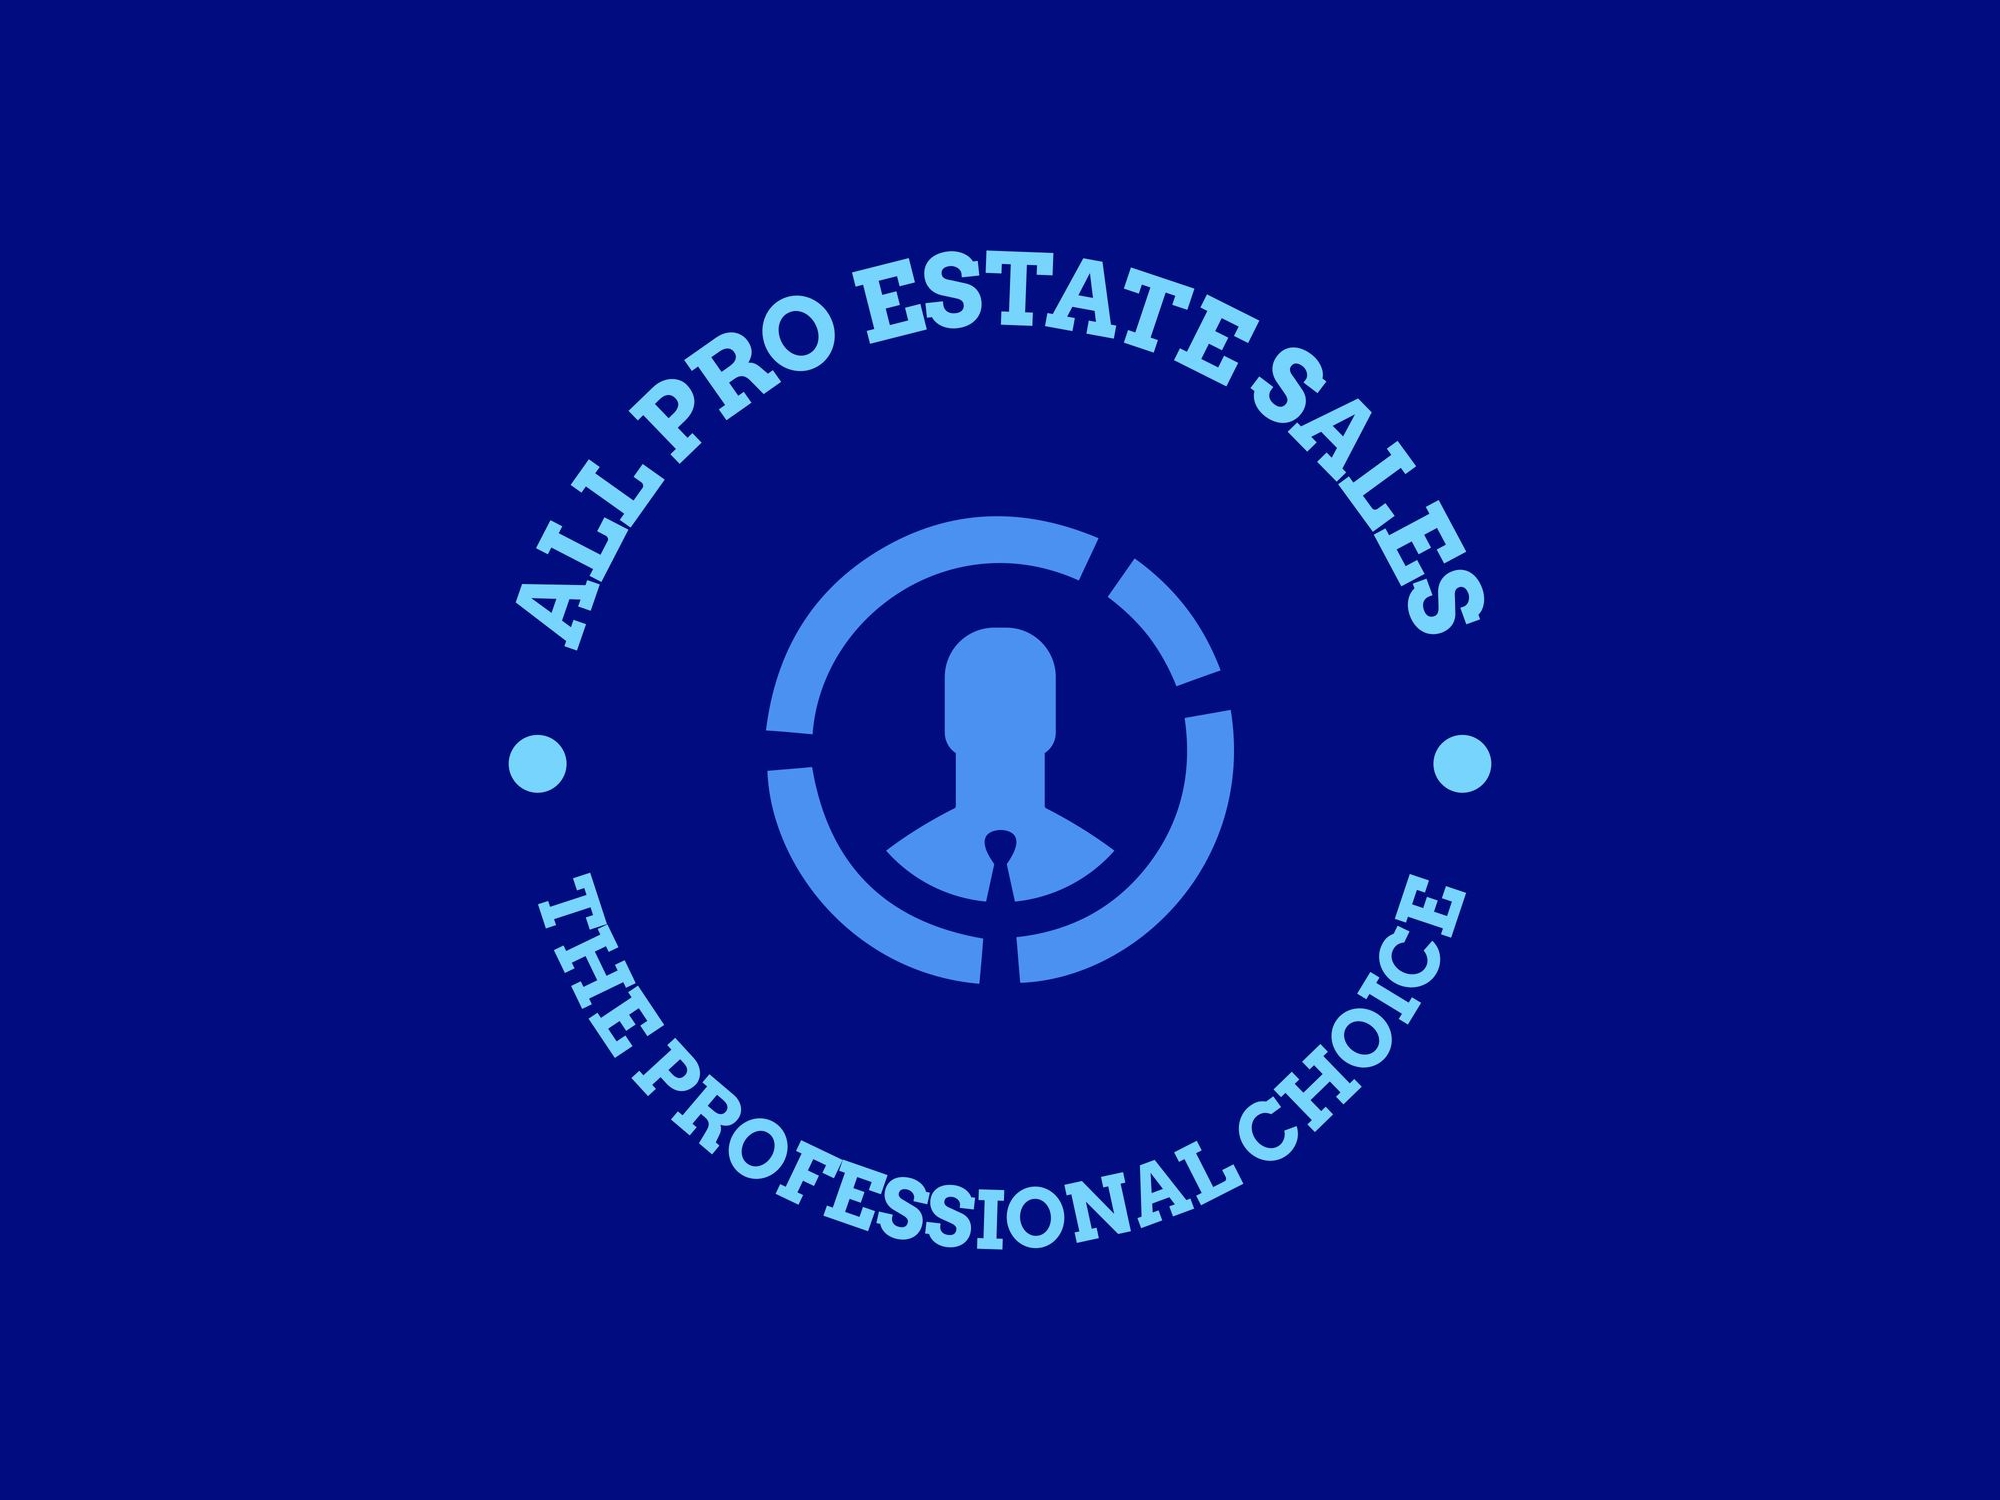 All Pro Estate Sales | AuctionNinja